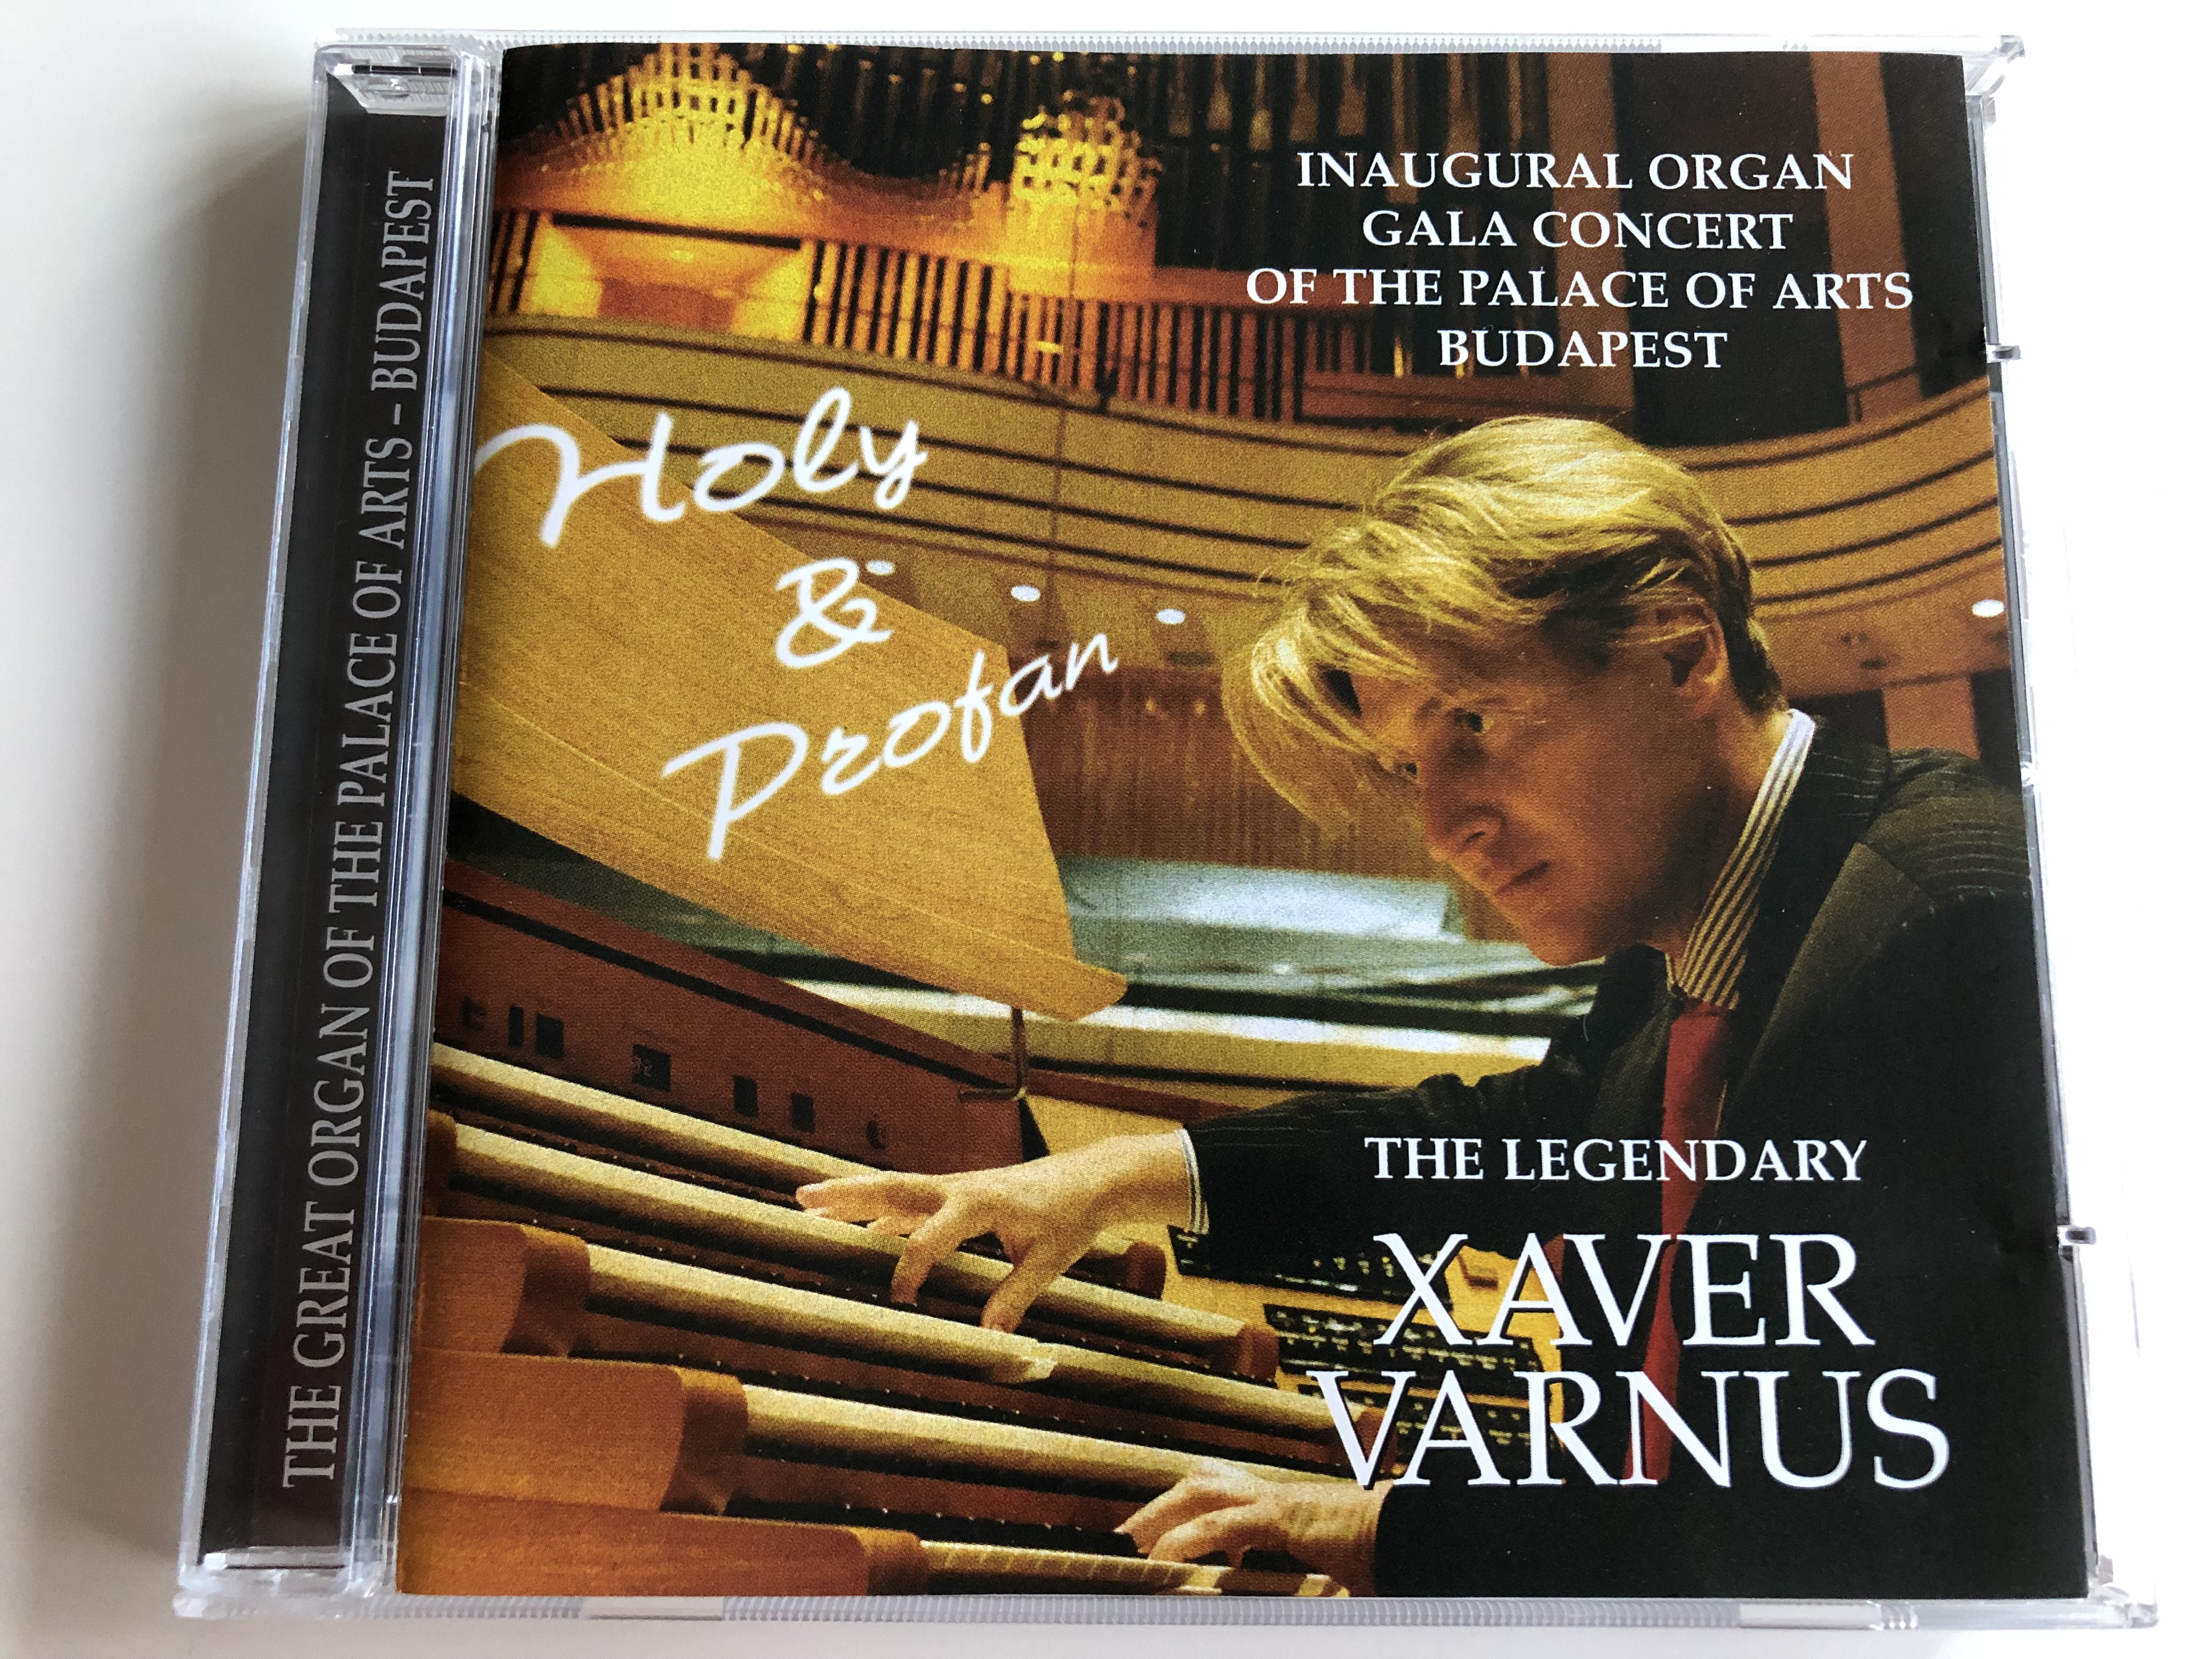 inaugural-organ-gala-concert-of-the-palace-of-arts-budapest-holy-profan-the-legendary-xav-r-varnus-aquincum-archive-ltd.-audio-cd-2006-acd-2000-1-.jpg